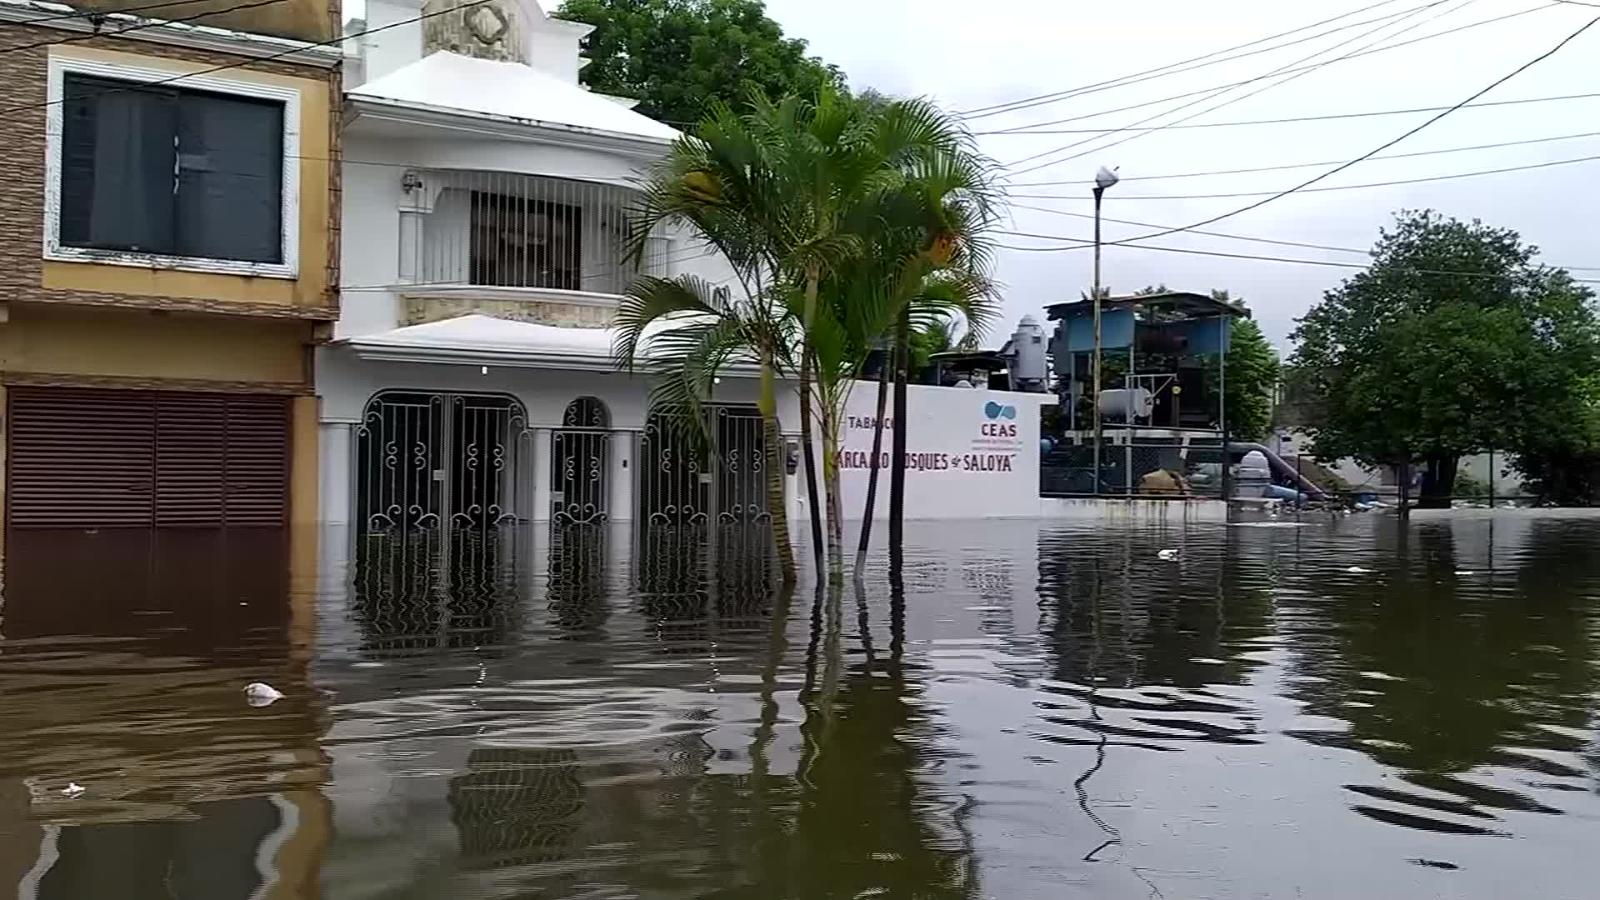 201005183956 Inundaciones Tormenta Tropical Gamma En Tabasco Mexico Full 169 ?quality=100&strip=info